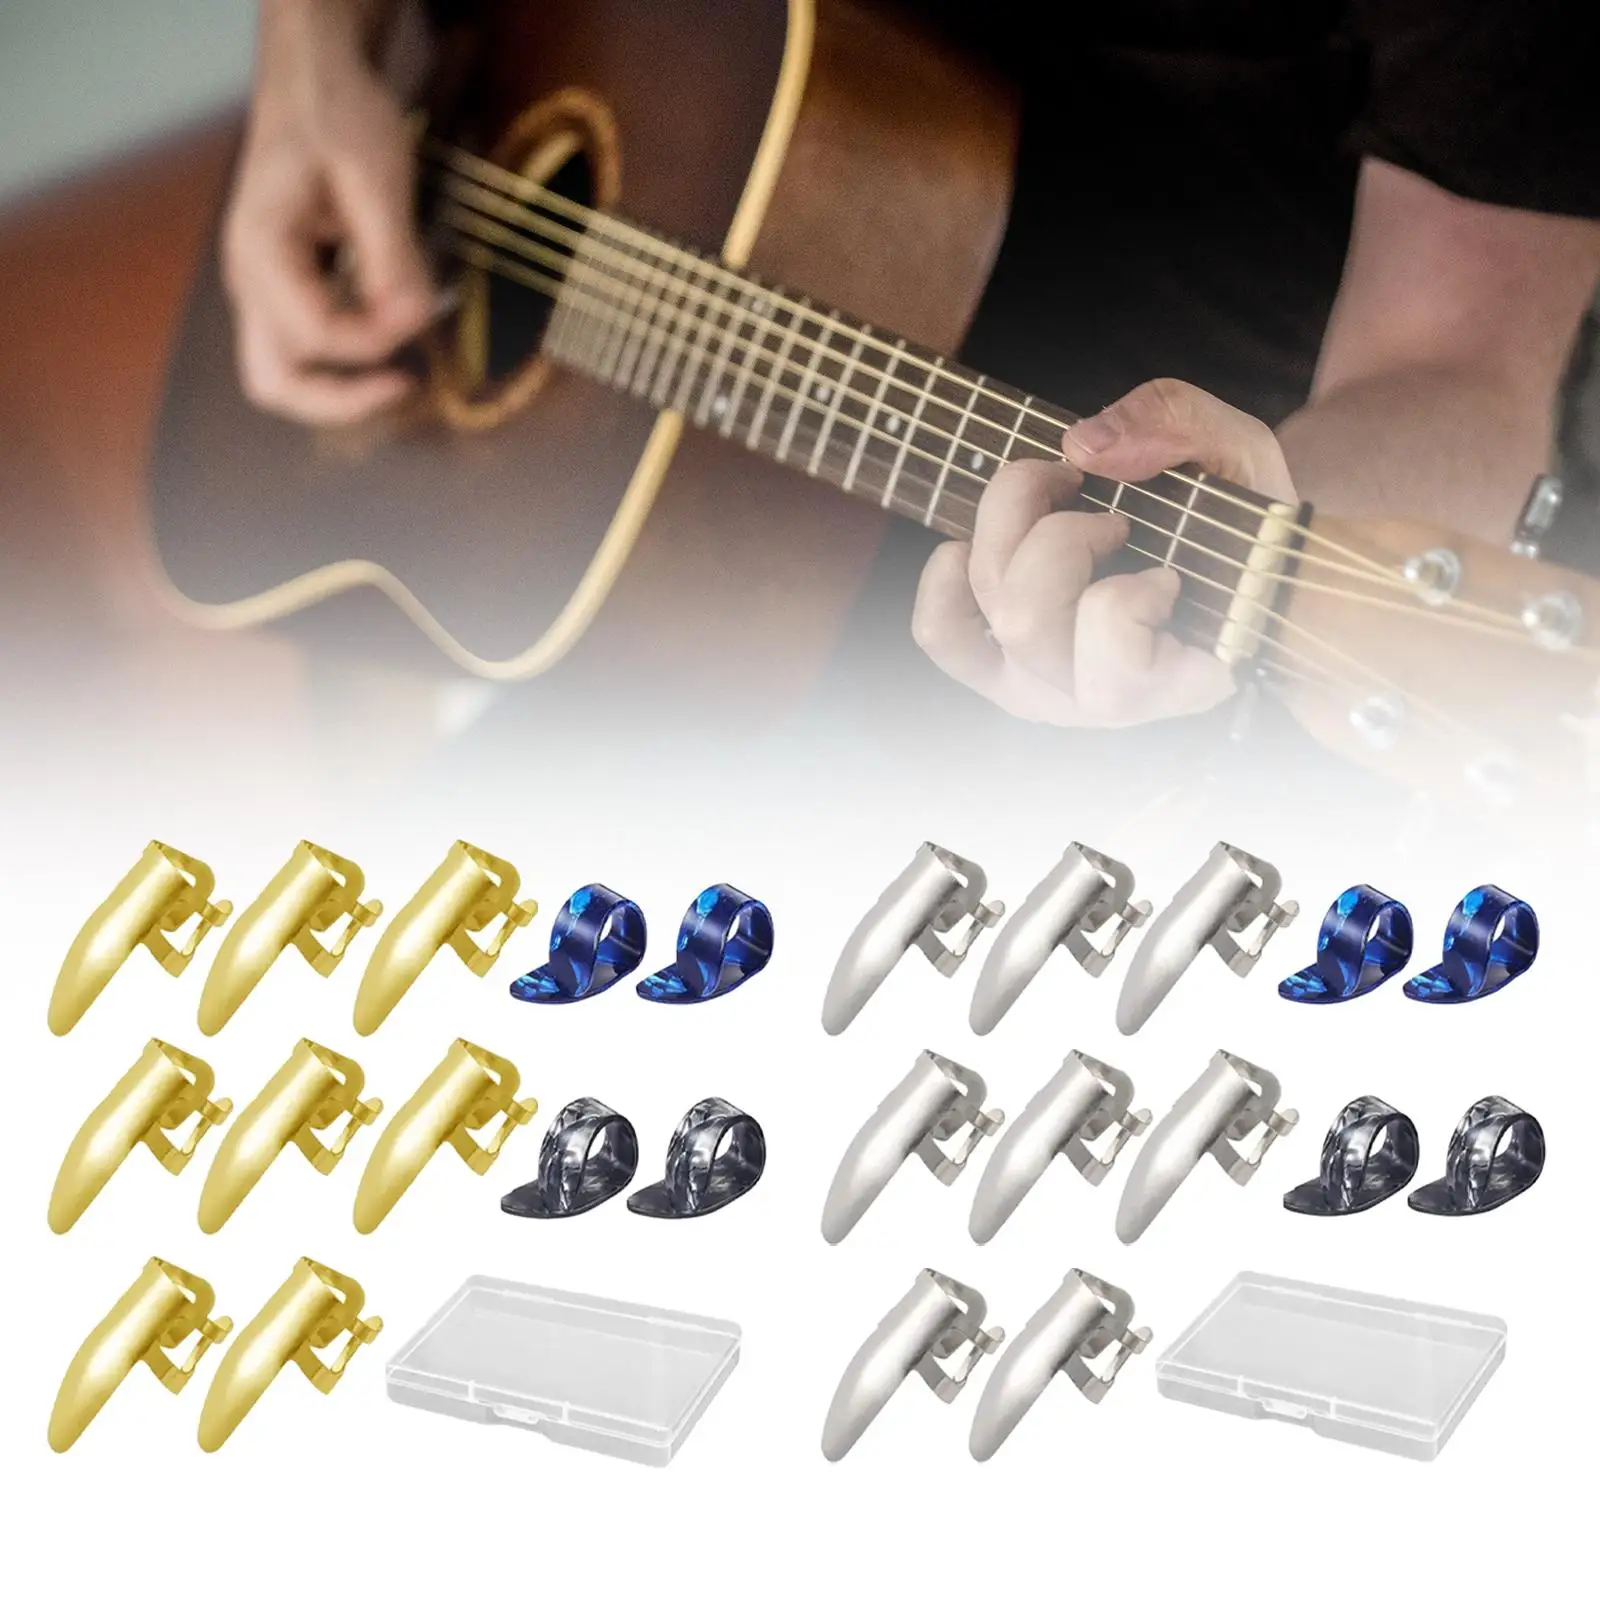 Thumb Finger pick Guitar Accessories Guitar Plectrums Replacement Parts Guitar Accessories Set Metal Finger Picks